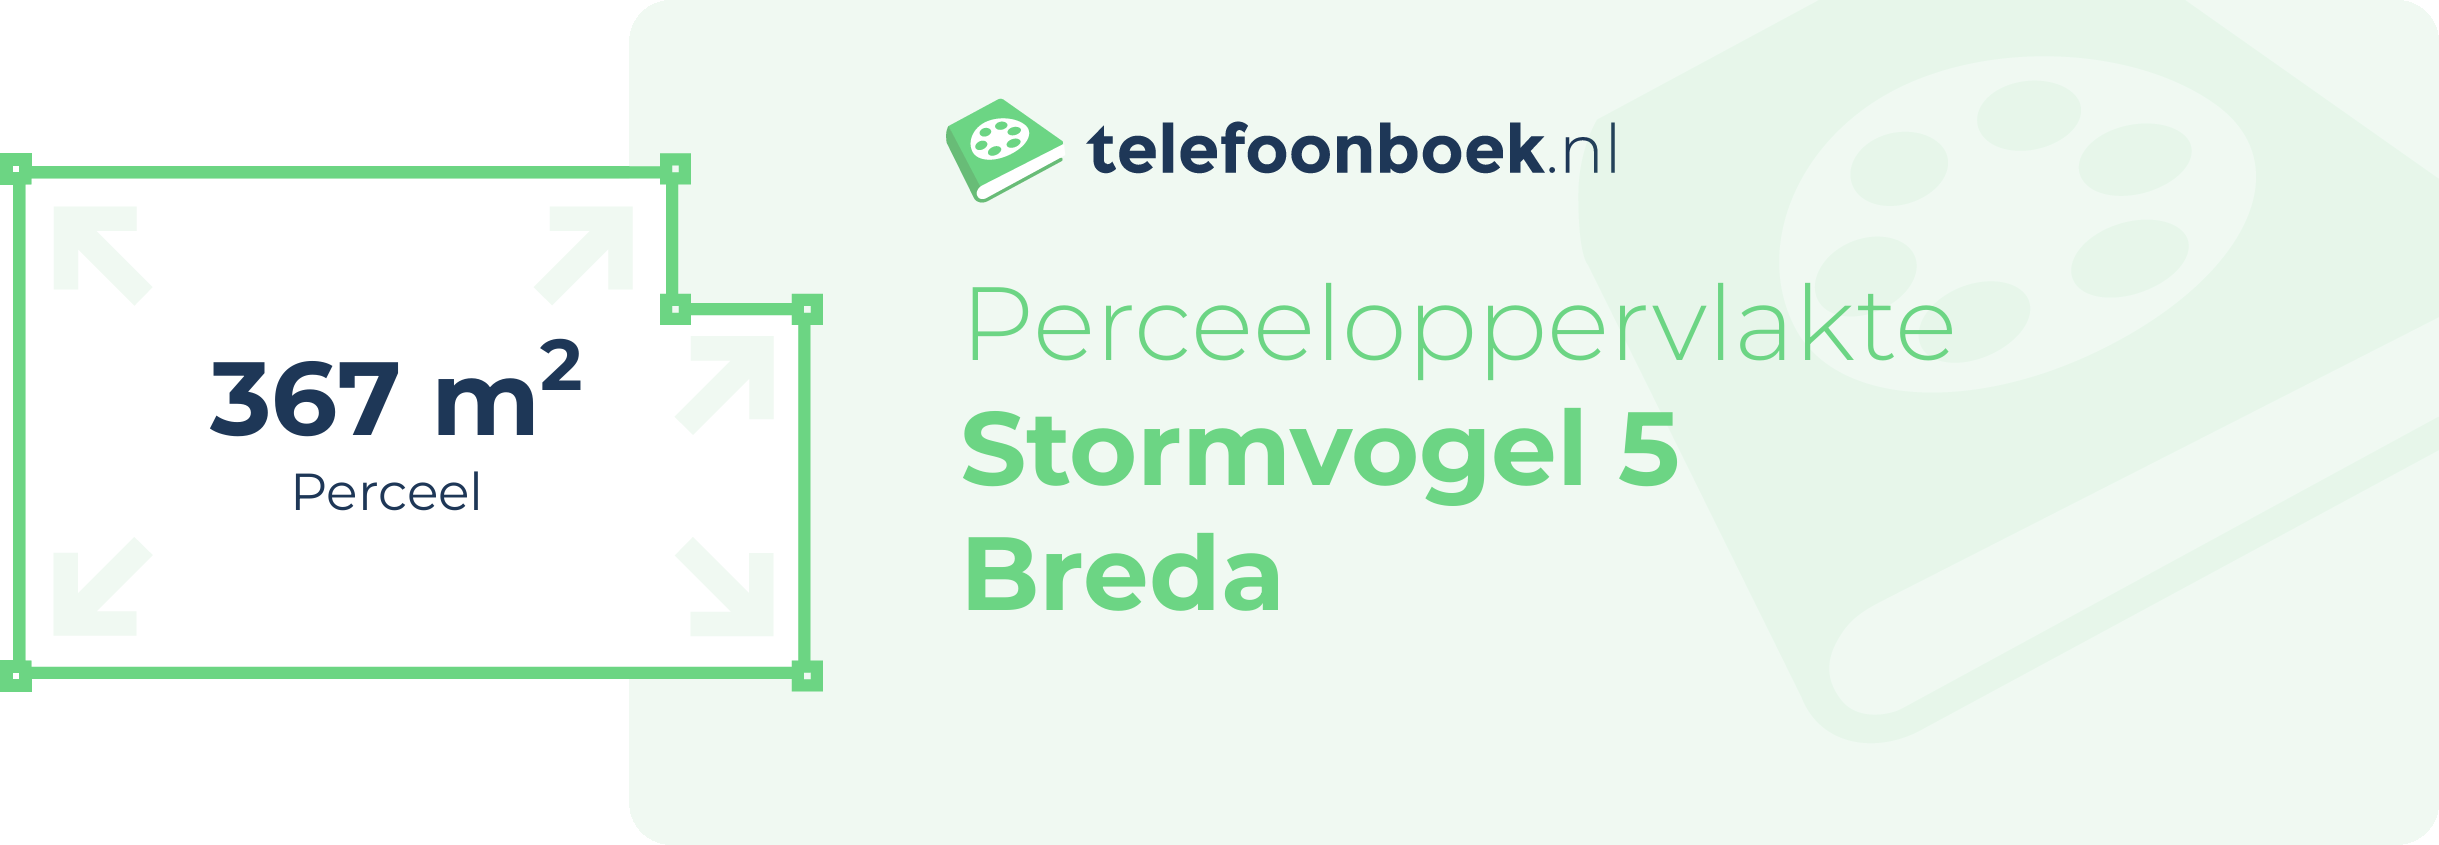 Perceeloppervlakte Stormvogel 5 Breda